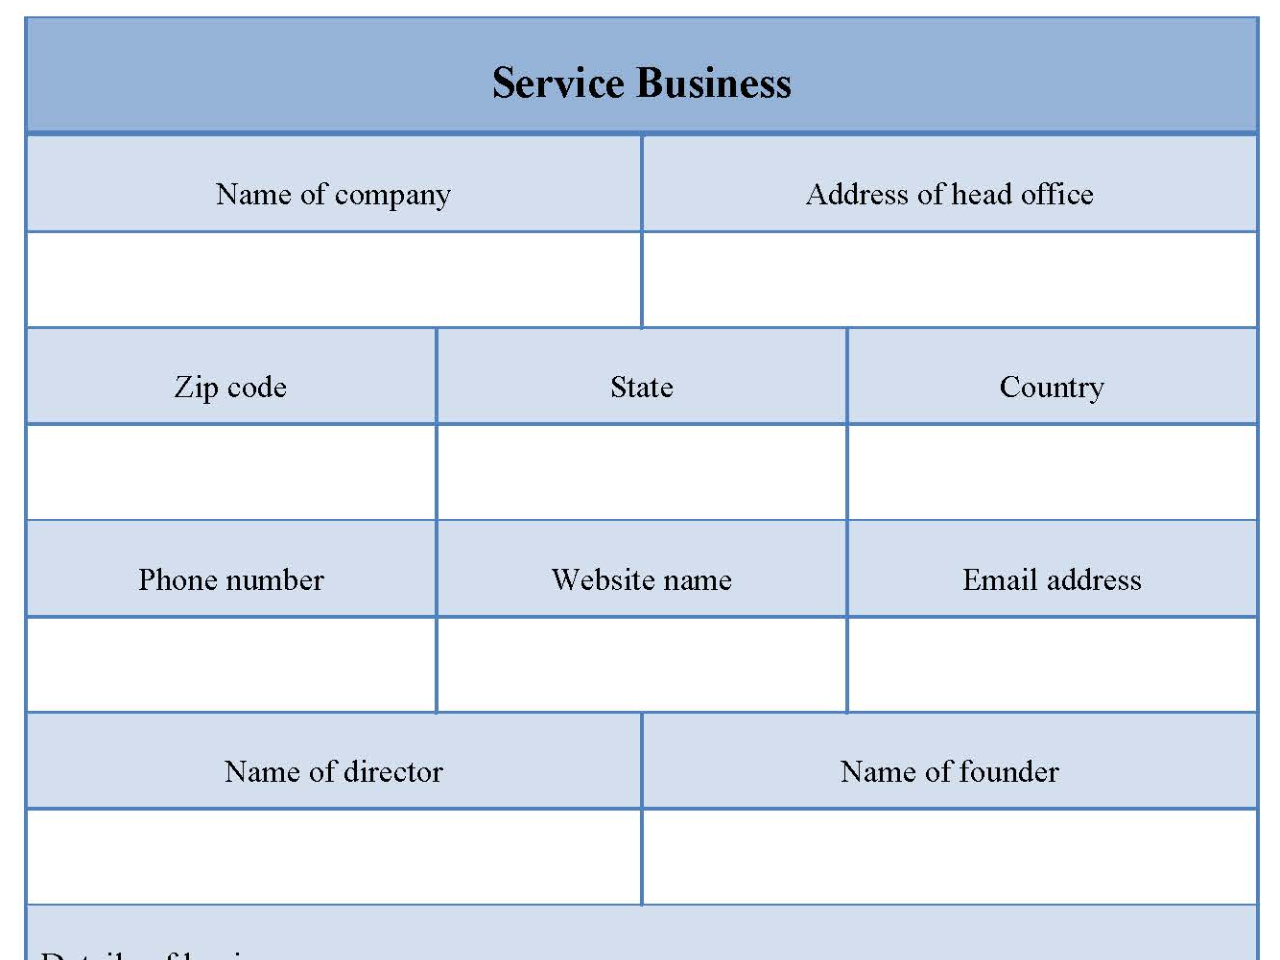 Service Business Template